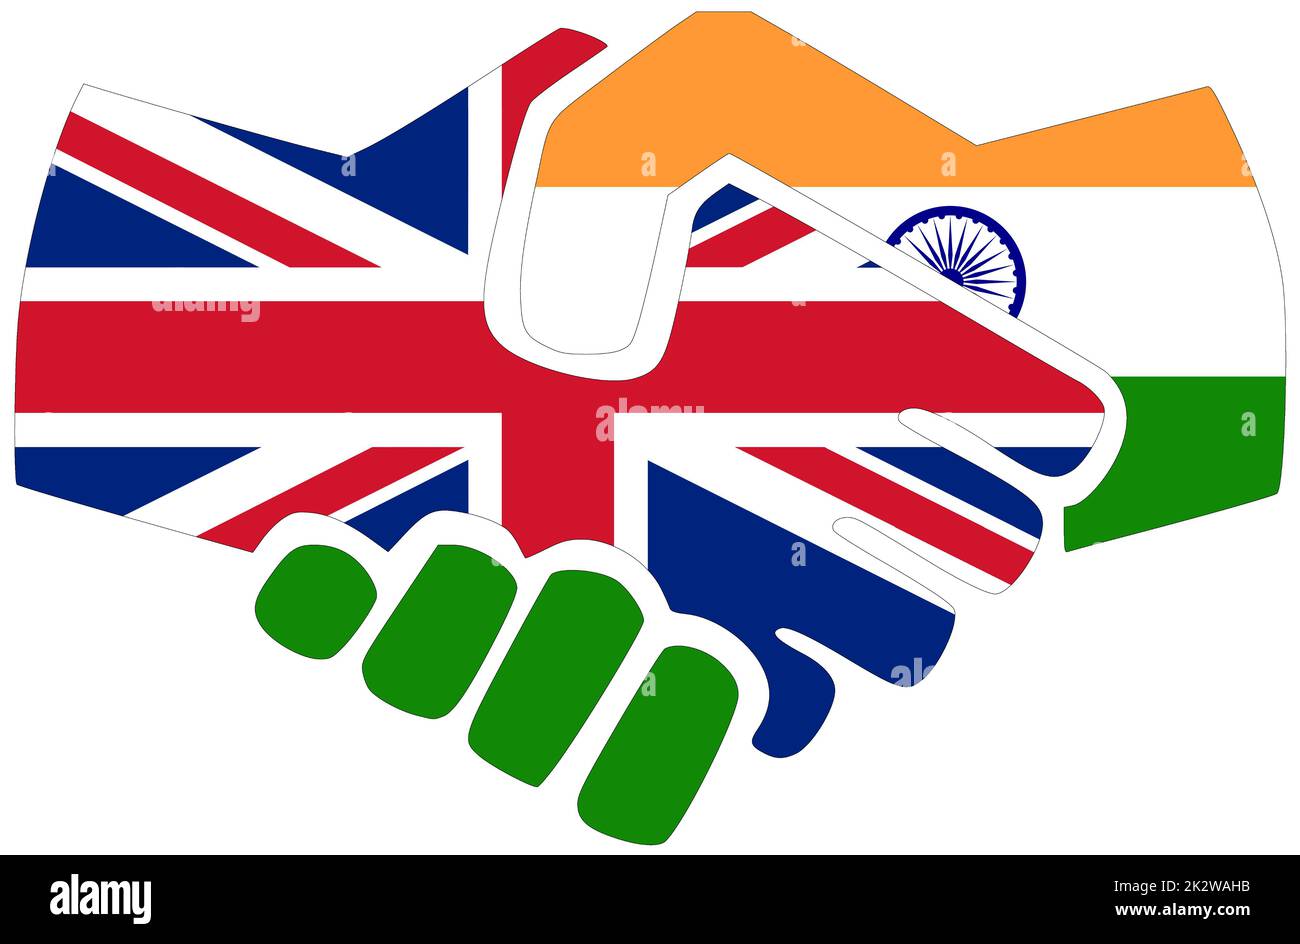 UK - India : Handshake, symbol of agreement or friendship Stock Photo